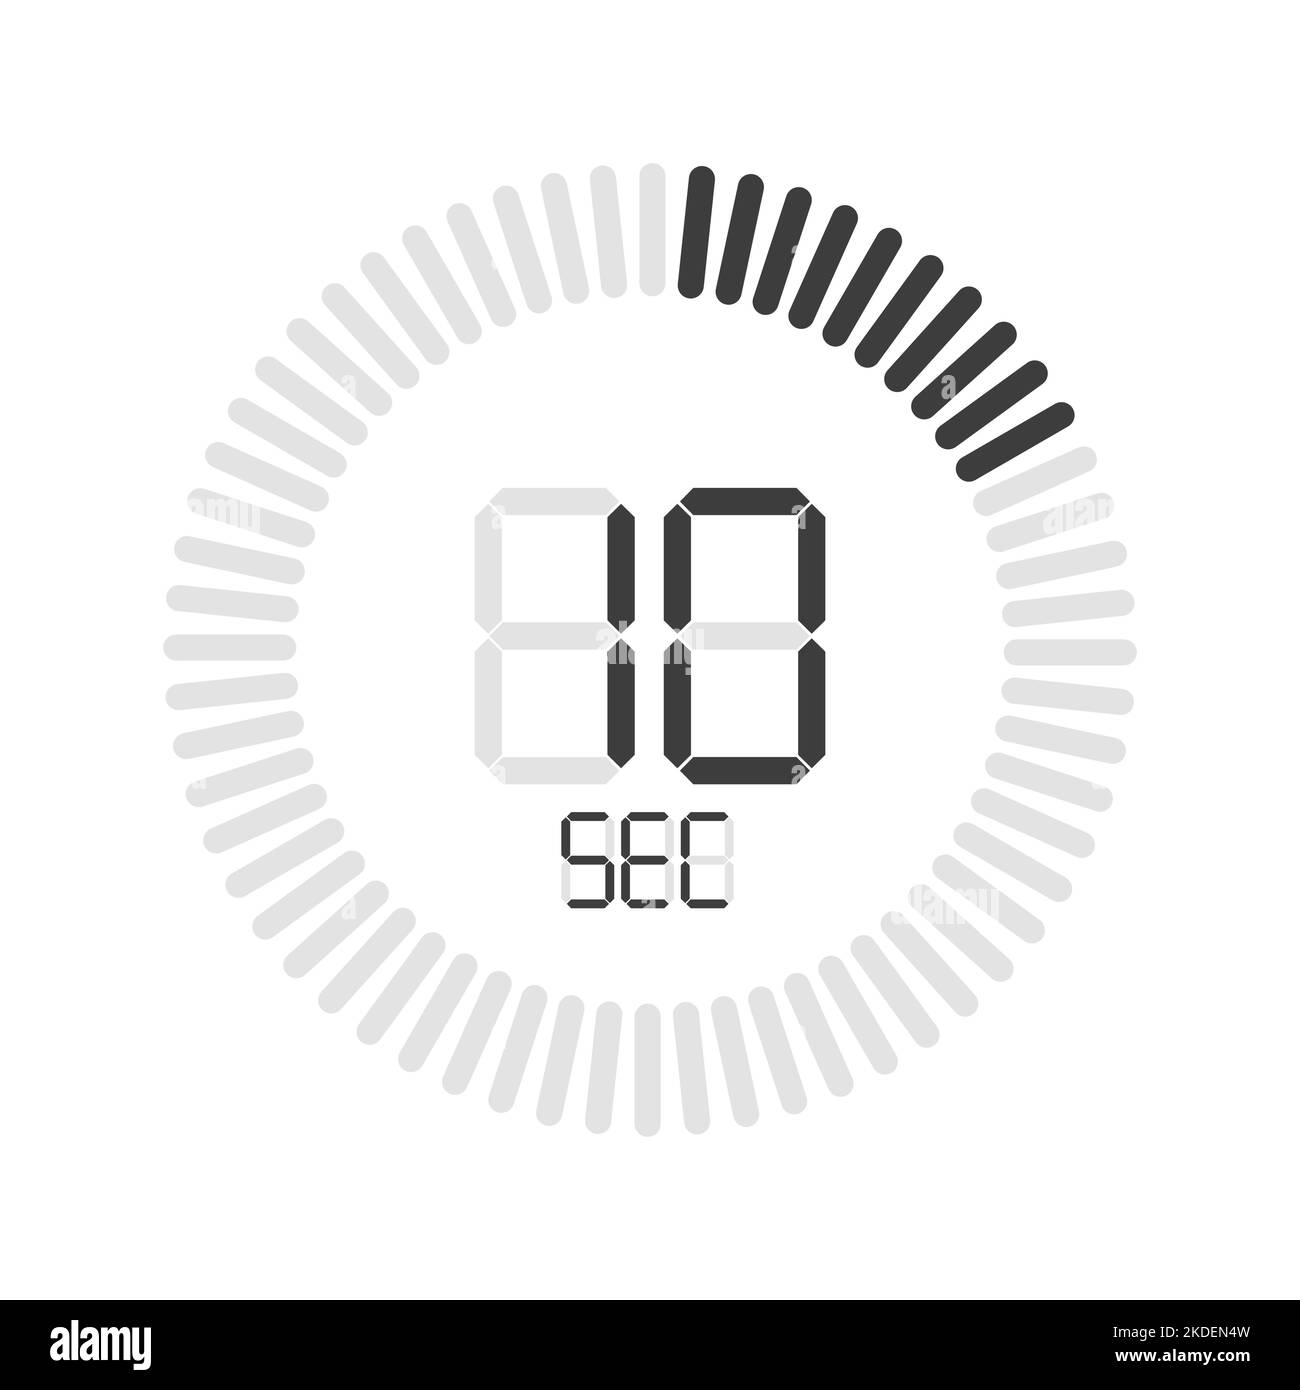 https://c8.alamy.com/comp/2KDEN4W/stopwatch-digital-timer-countdown-clock-and-digital-numbers-2KDEN4W.jpg